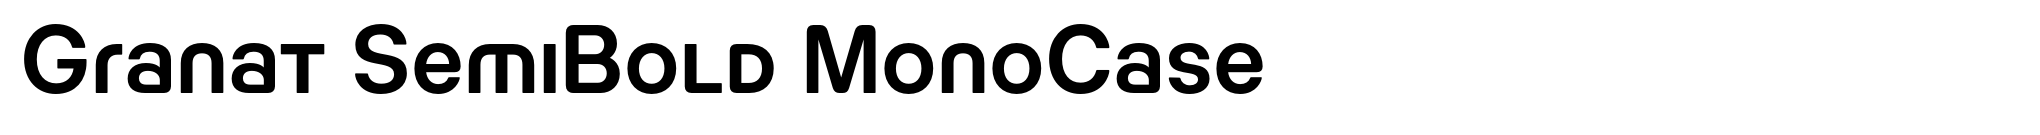 Granat SemiBold MonoCase image